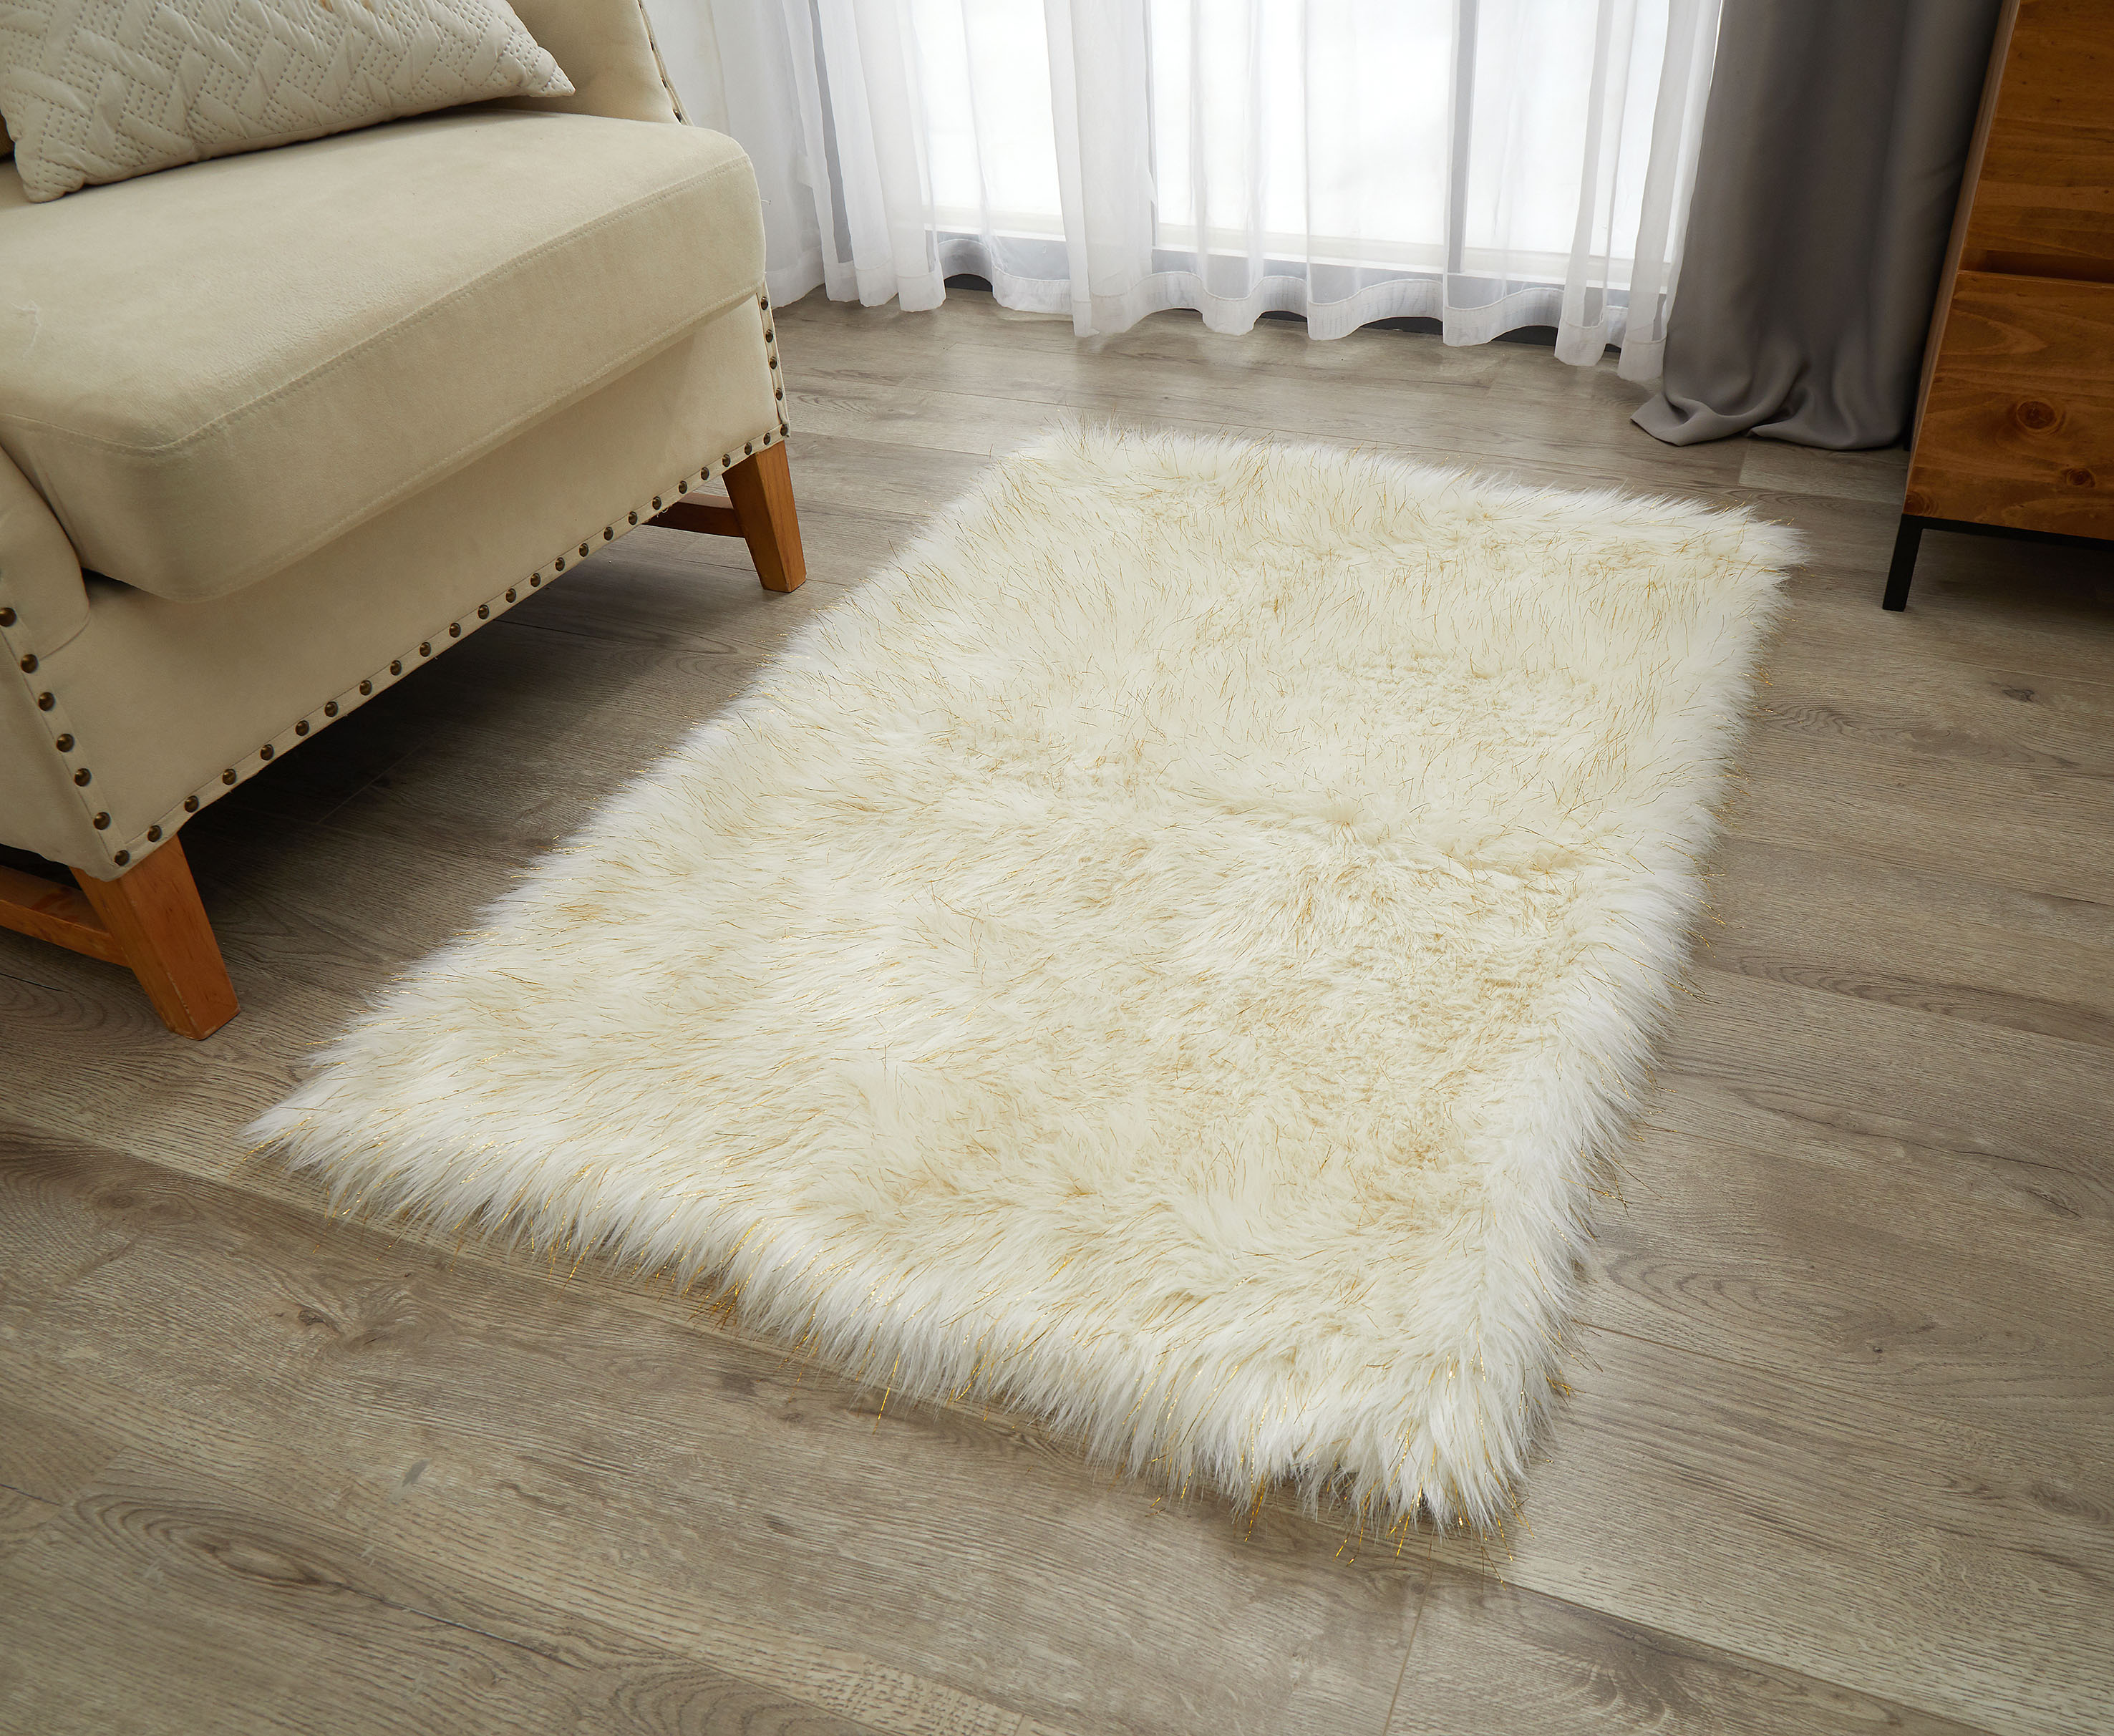 Lanco Fluffy Sheepskin Faux Fur Shag Area Rug, White, 30x46 